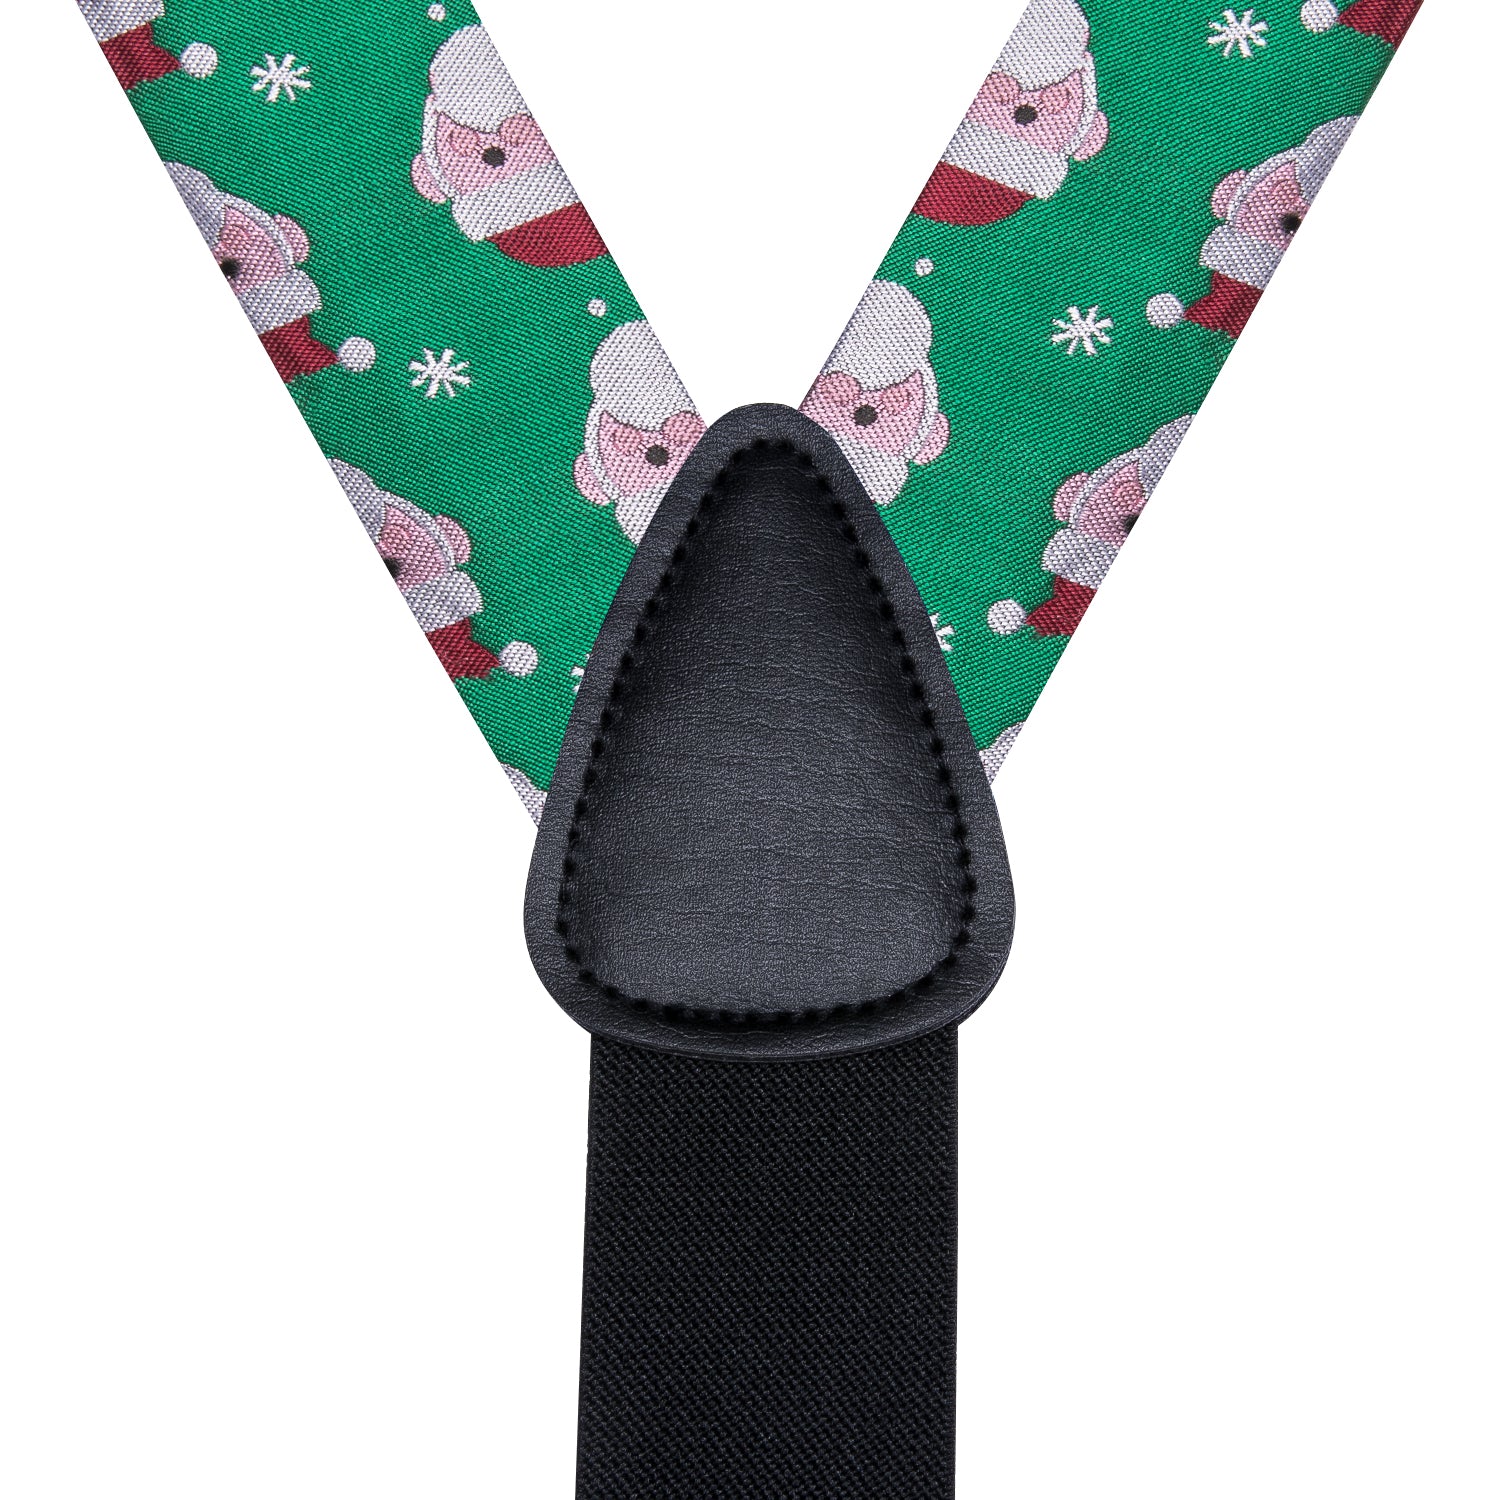 Green Christmas Snowman Suspender Bowtie Hanky Cufflinks Set